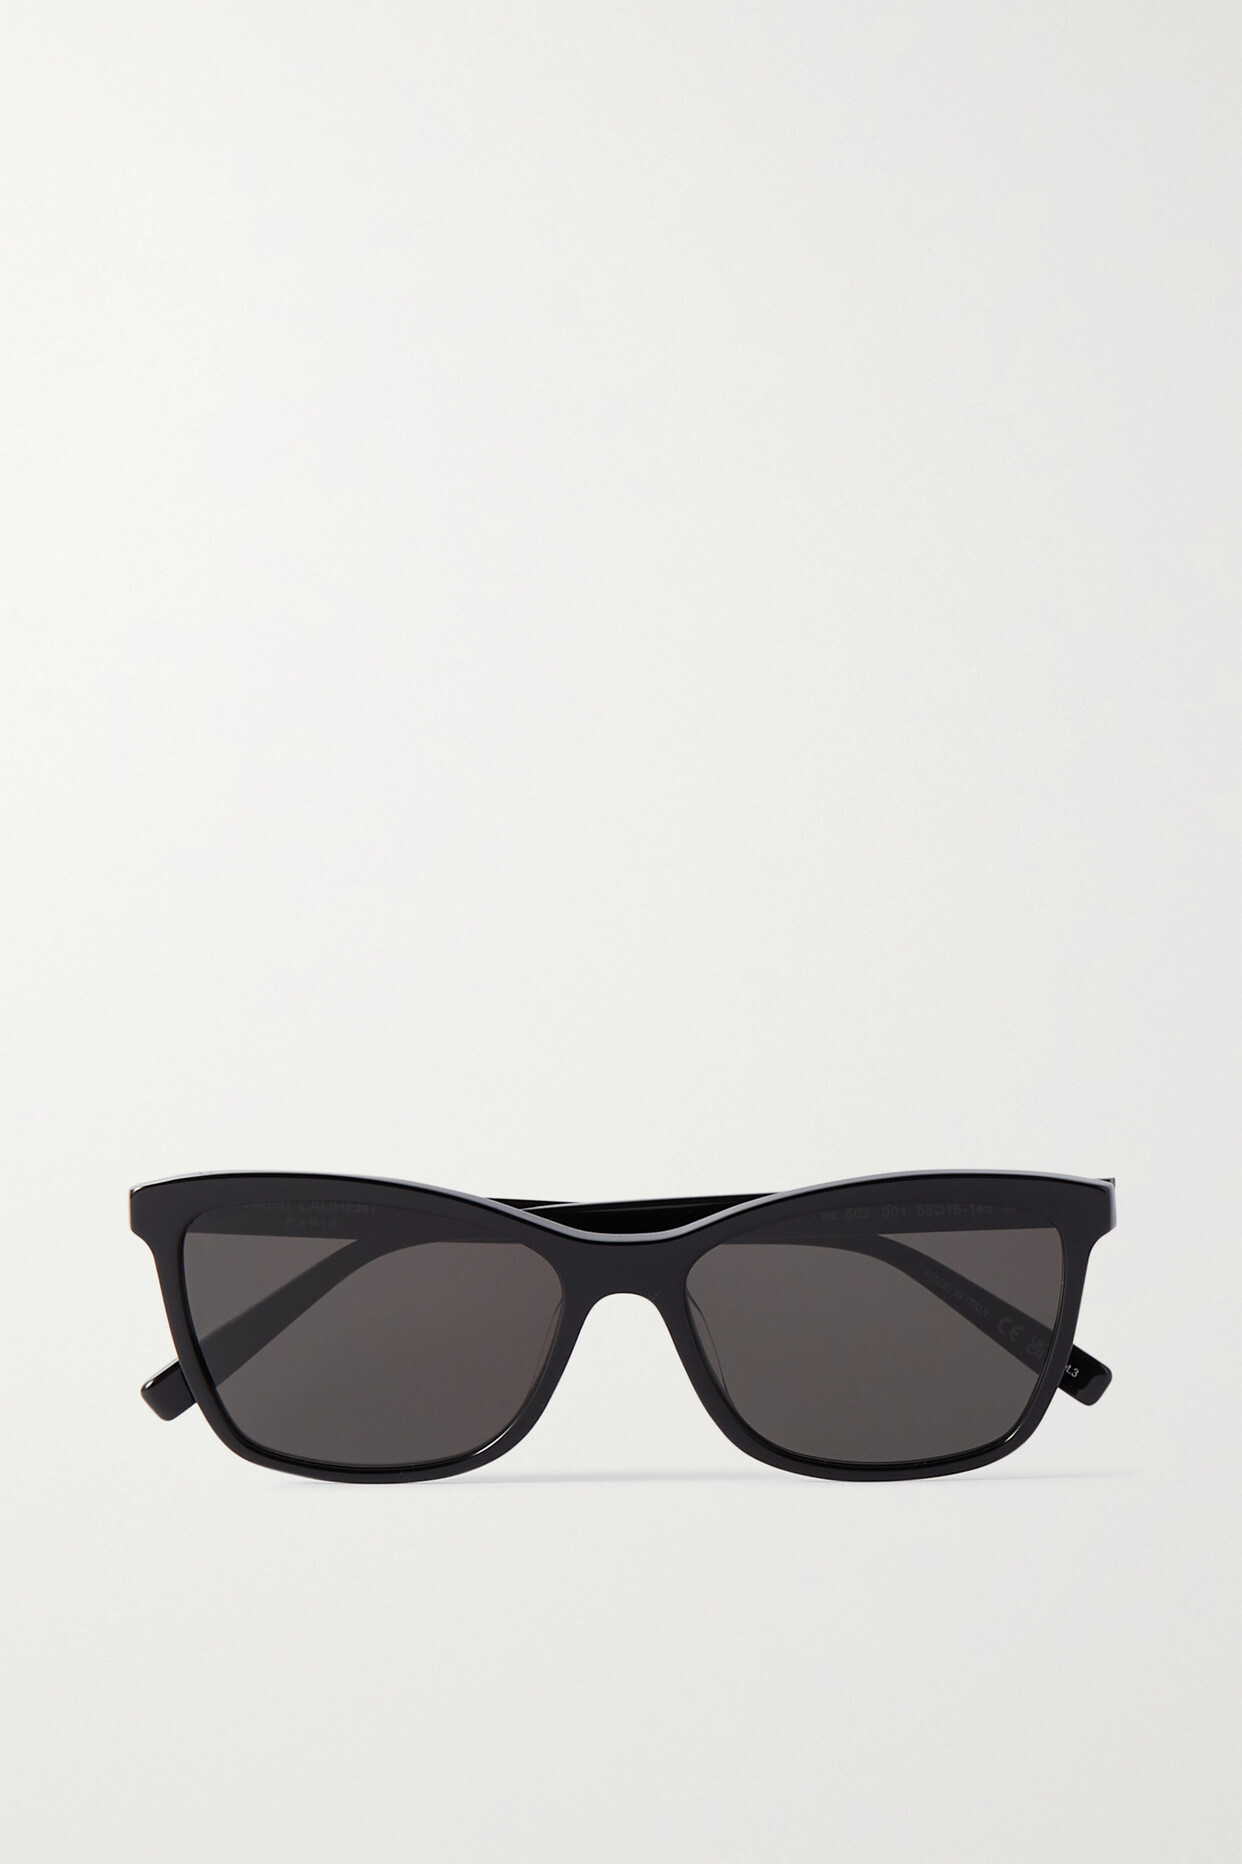 SAINT LAURENT Eyewear - Square-frame Acetate Sunglasses - Black